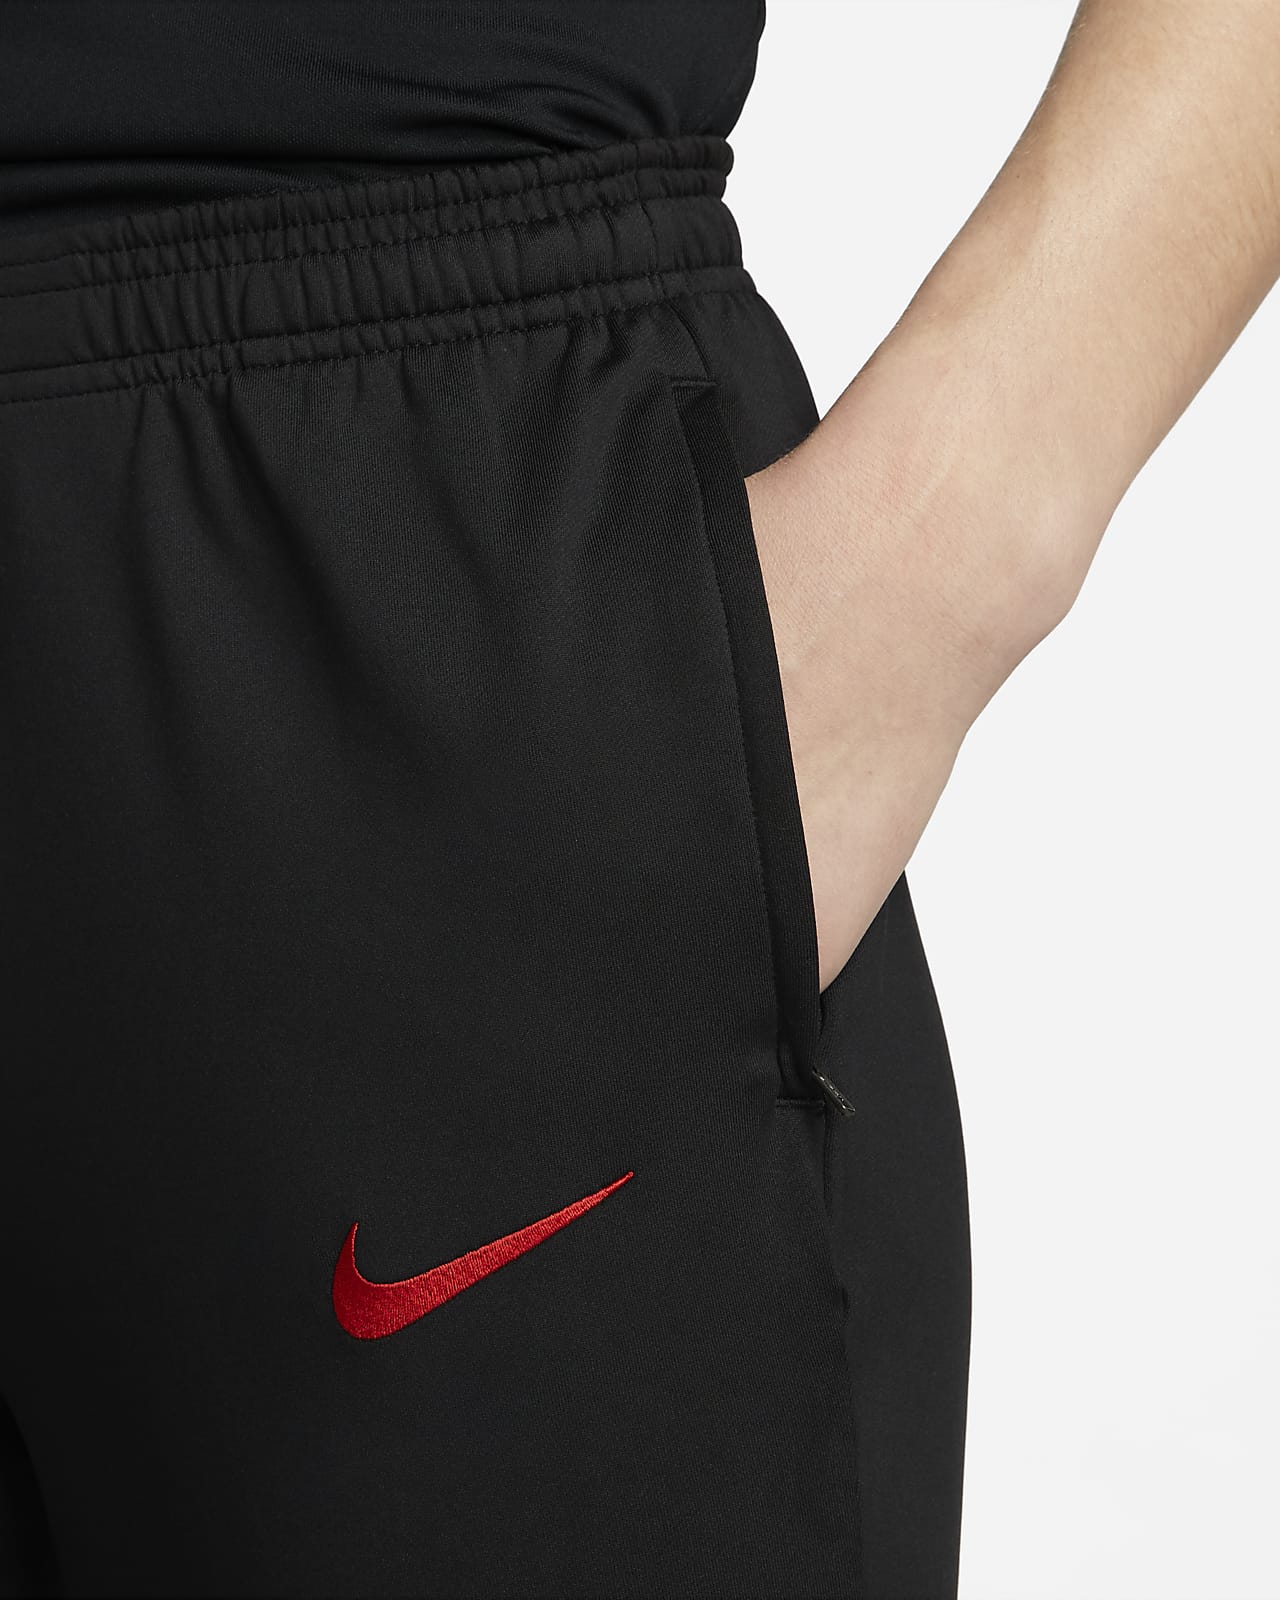 U.S. Strike Women's Nike Dri-FIT Knit Soccer Pants